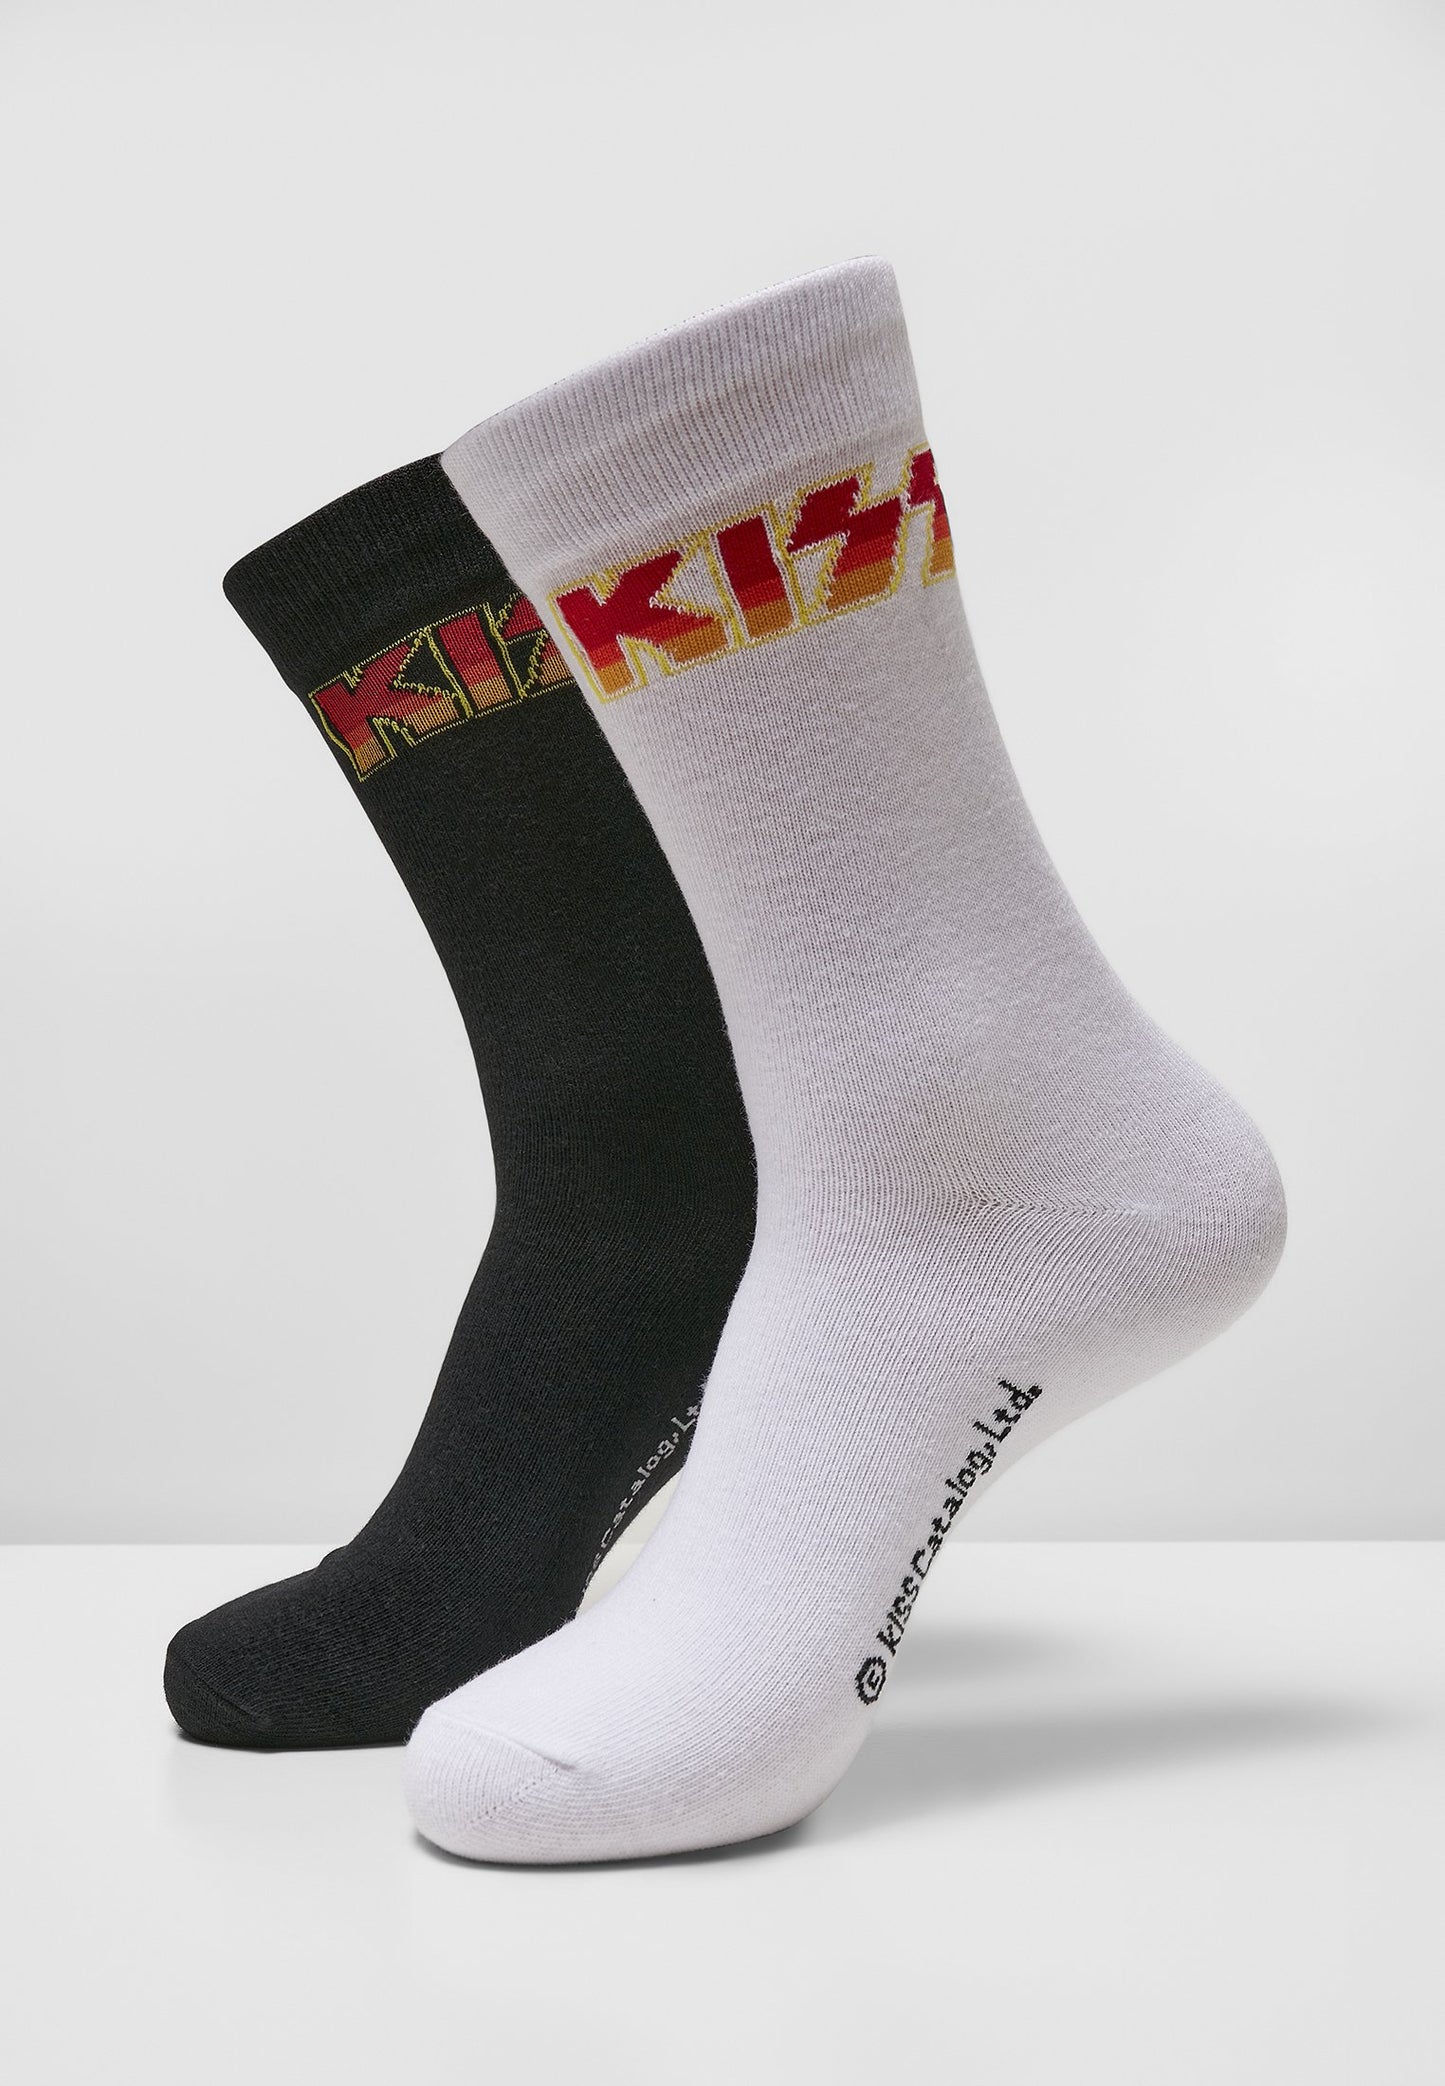 Kiss Socken 2-Pack-Street-& Sportswear Aurich - Wäsche & Socken